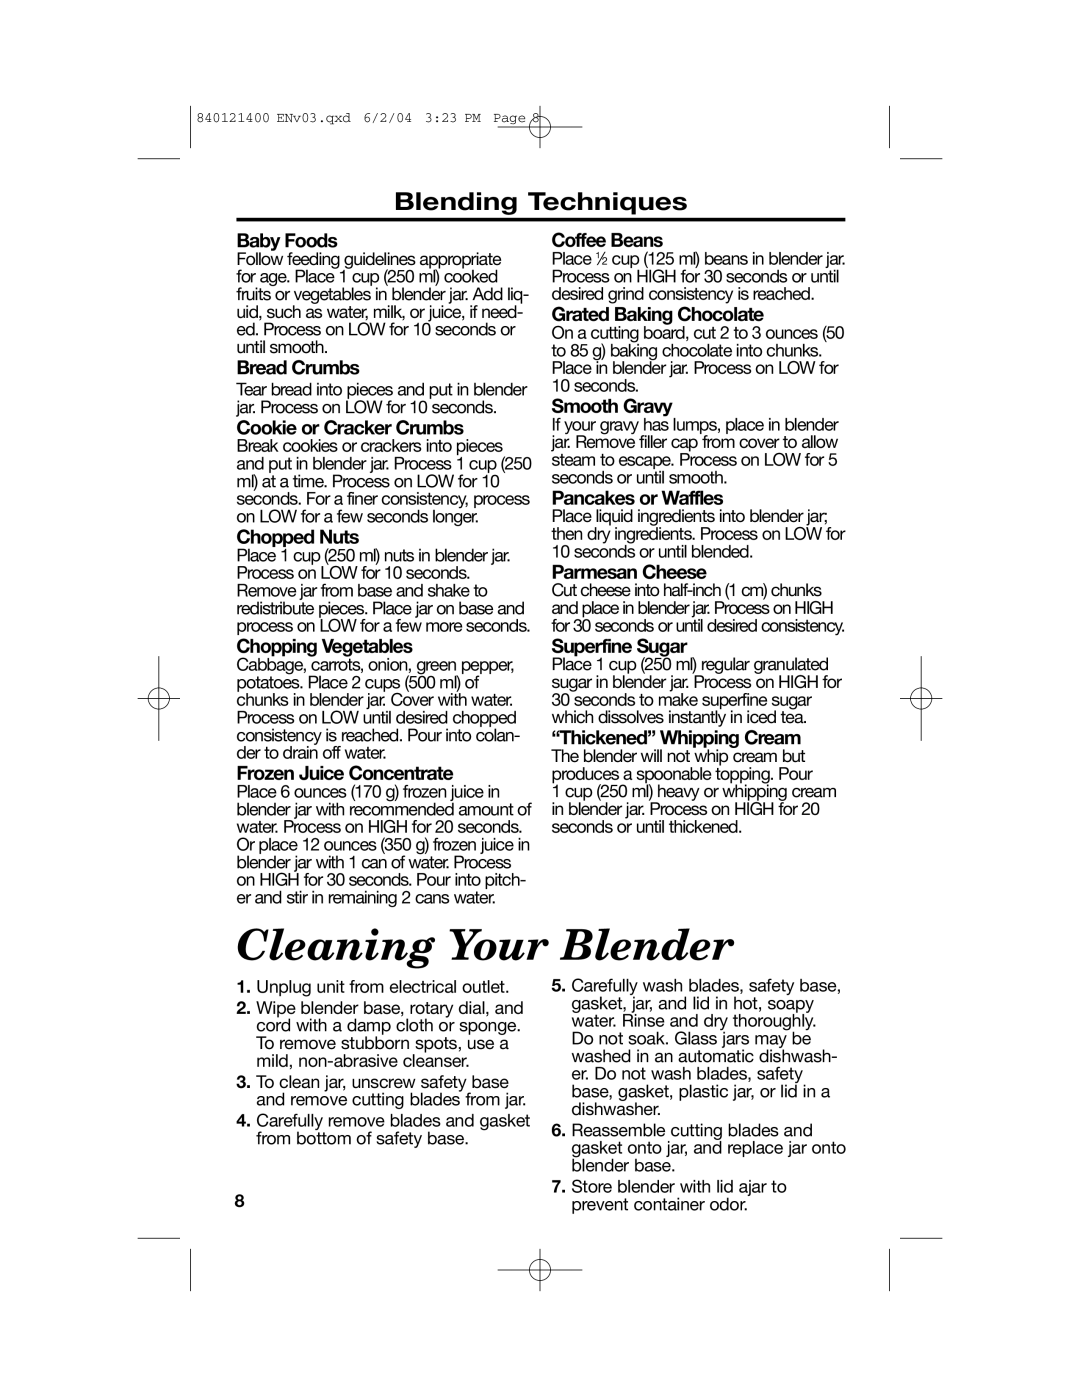 Hamilton Beach All-Metal Blender manual Cleaning Your Blender, Blending Techniques 